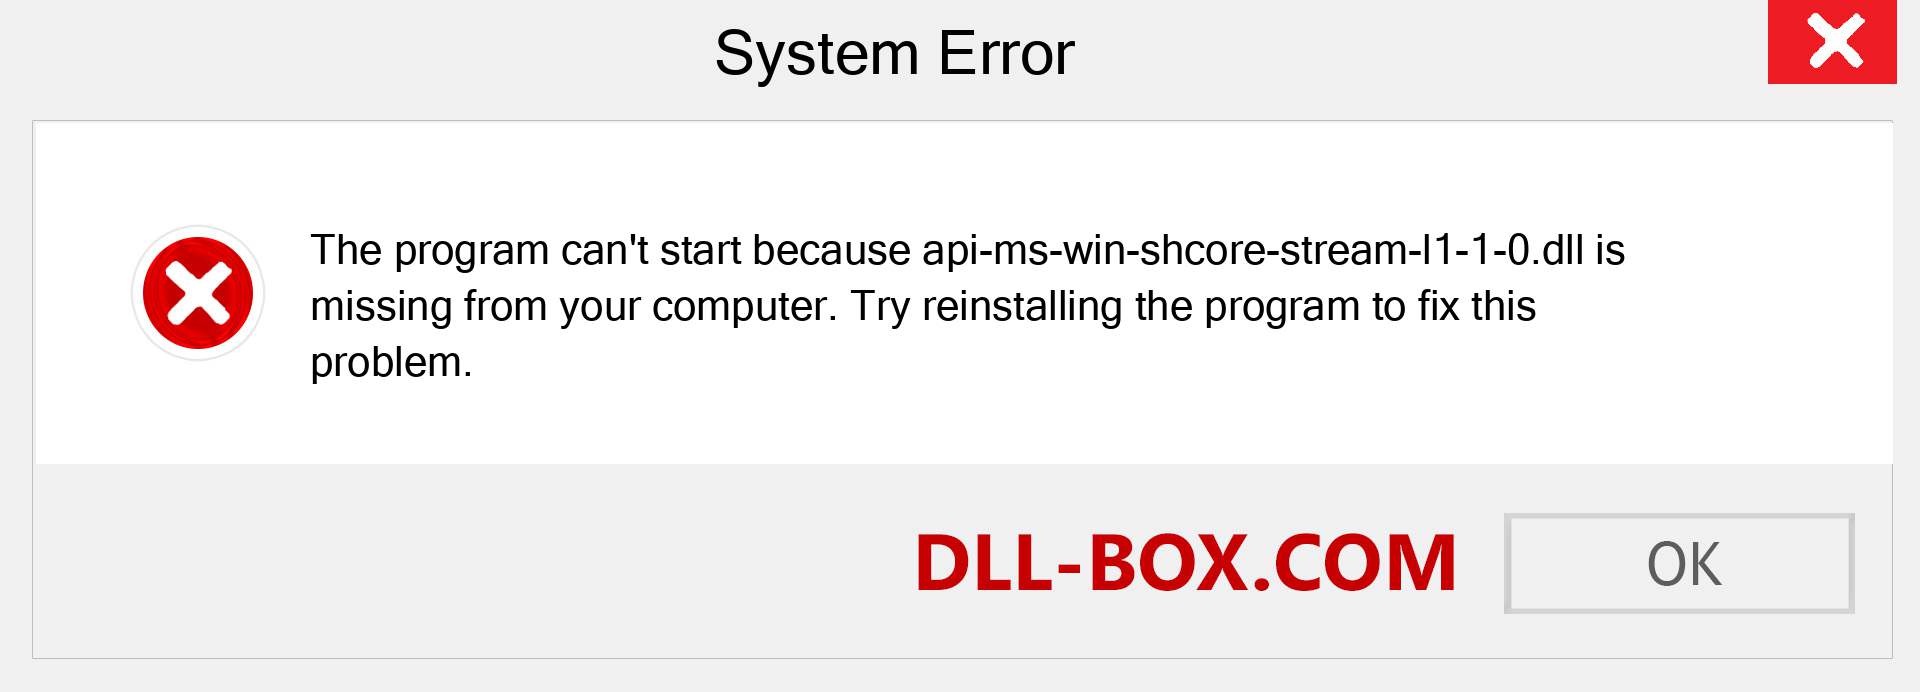  api-ms-win-shcore-stream-l1-1-0.dll file is missing?. Download for Windows 7, 8, 10 - Fix  api-ms-win-shcore-stream-l1-1-0 dll Missing Error on Windows, photos, images